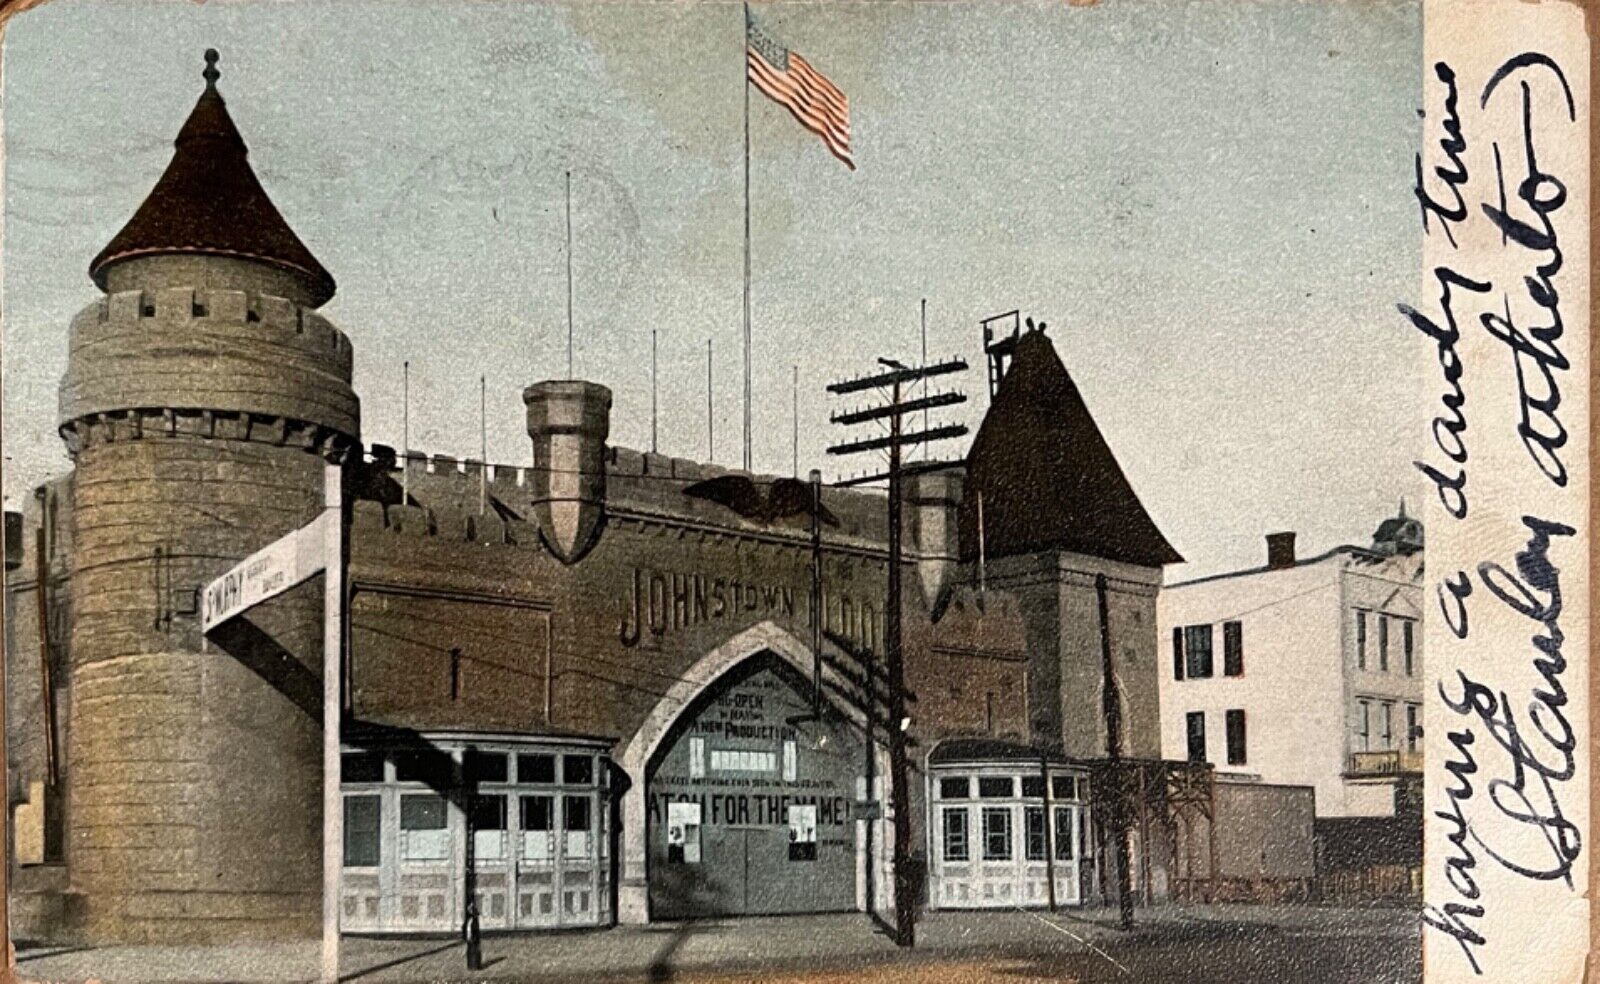 Coney Island Johnstown Flood Theater Building New York Antique Postcard c1900